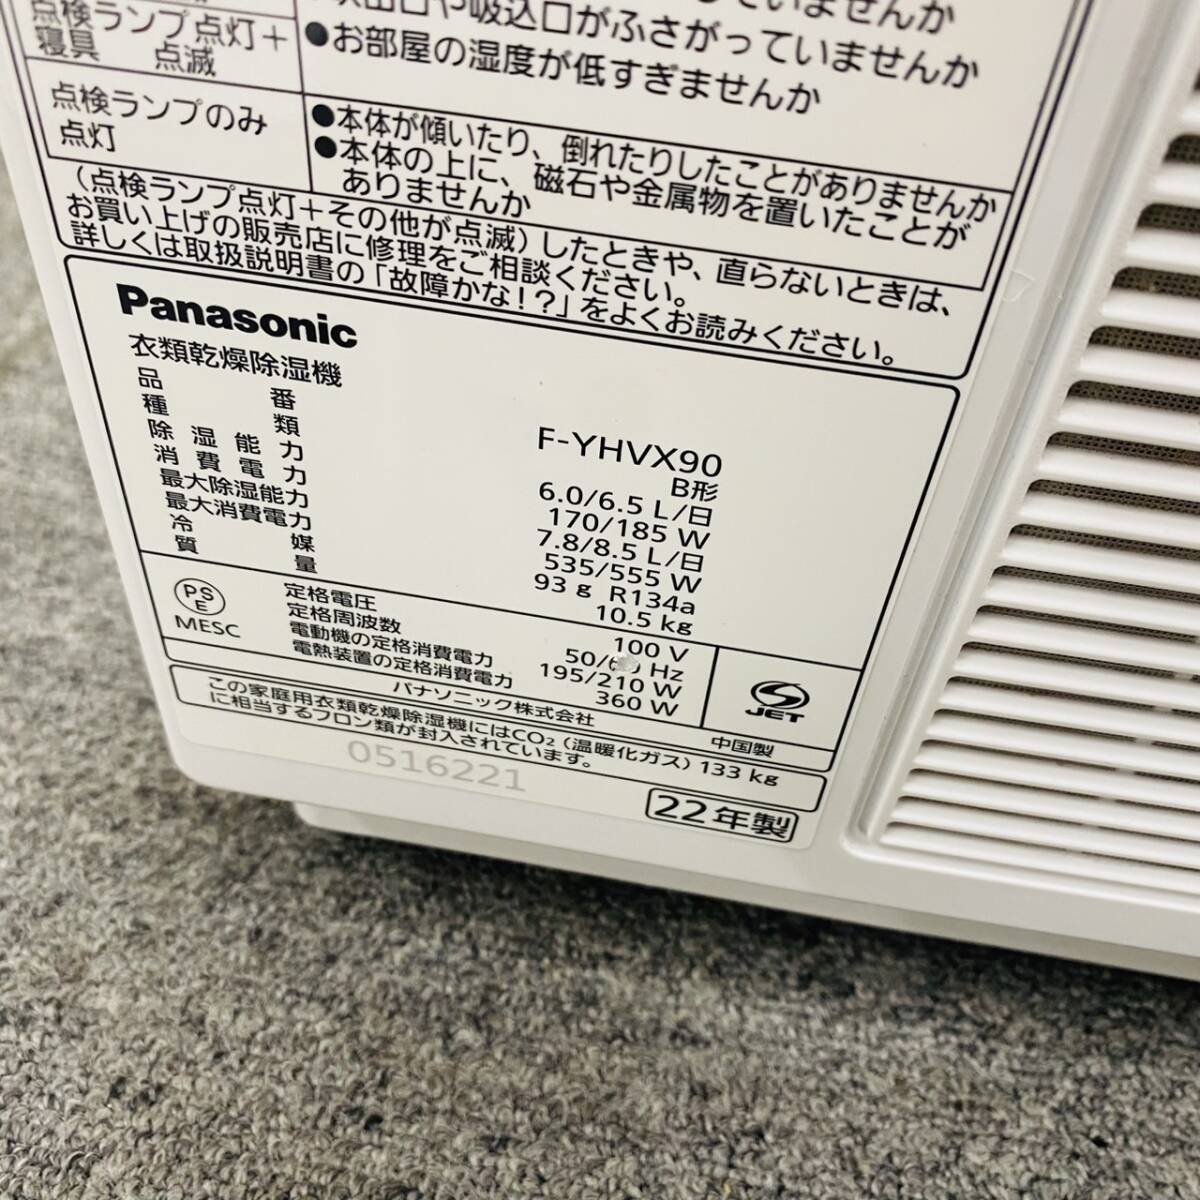 M225-Z9-709 Panasonic Panasonic clothes dry dehumidifier F-YHVX90 body electrification has confirmed 2022 year made white dehumidifier clothes dry consumer electronics ②